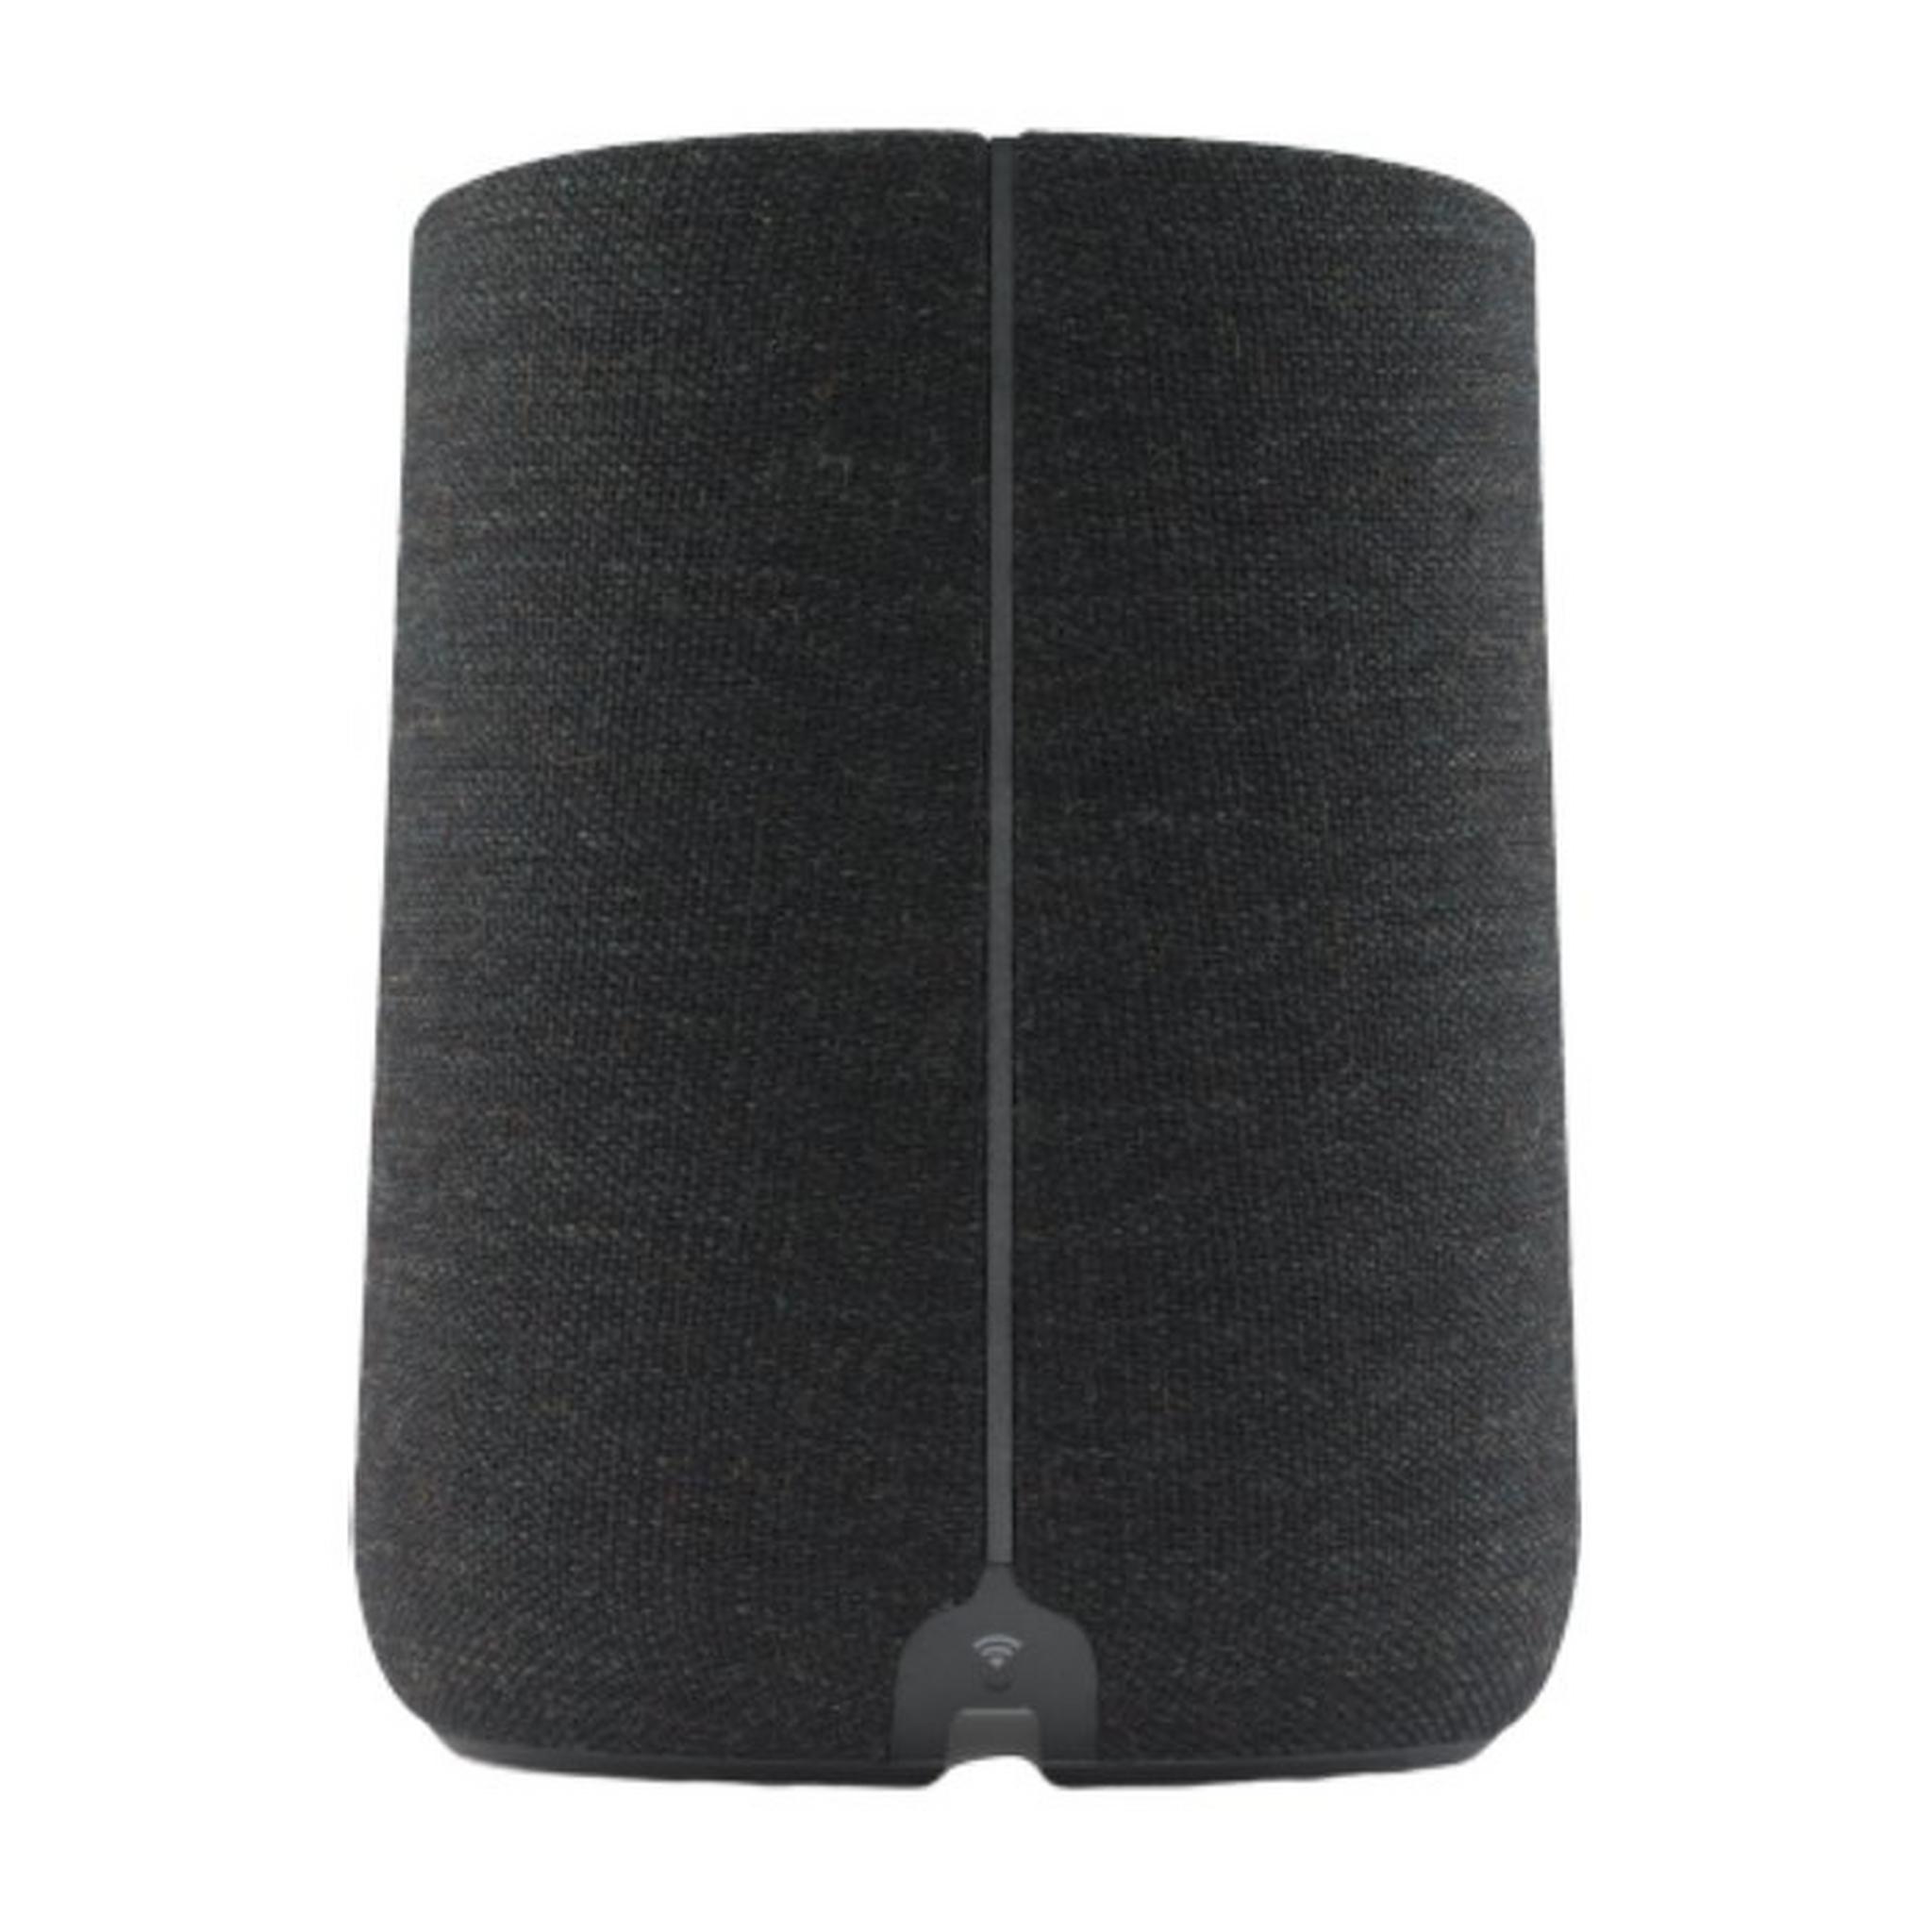 Harman Kardon Citation One Wireless Speaker - Black